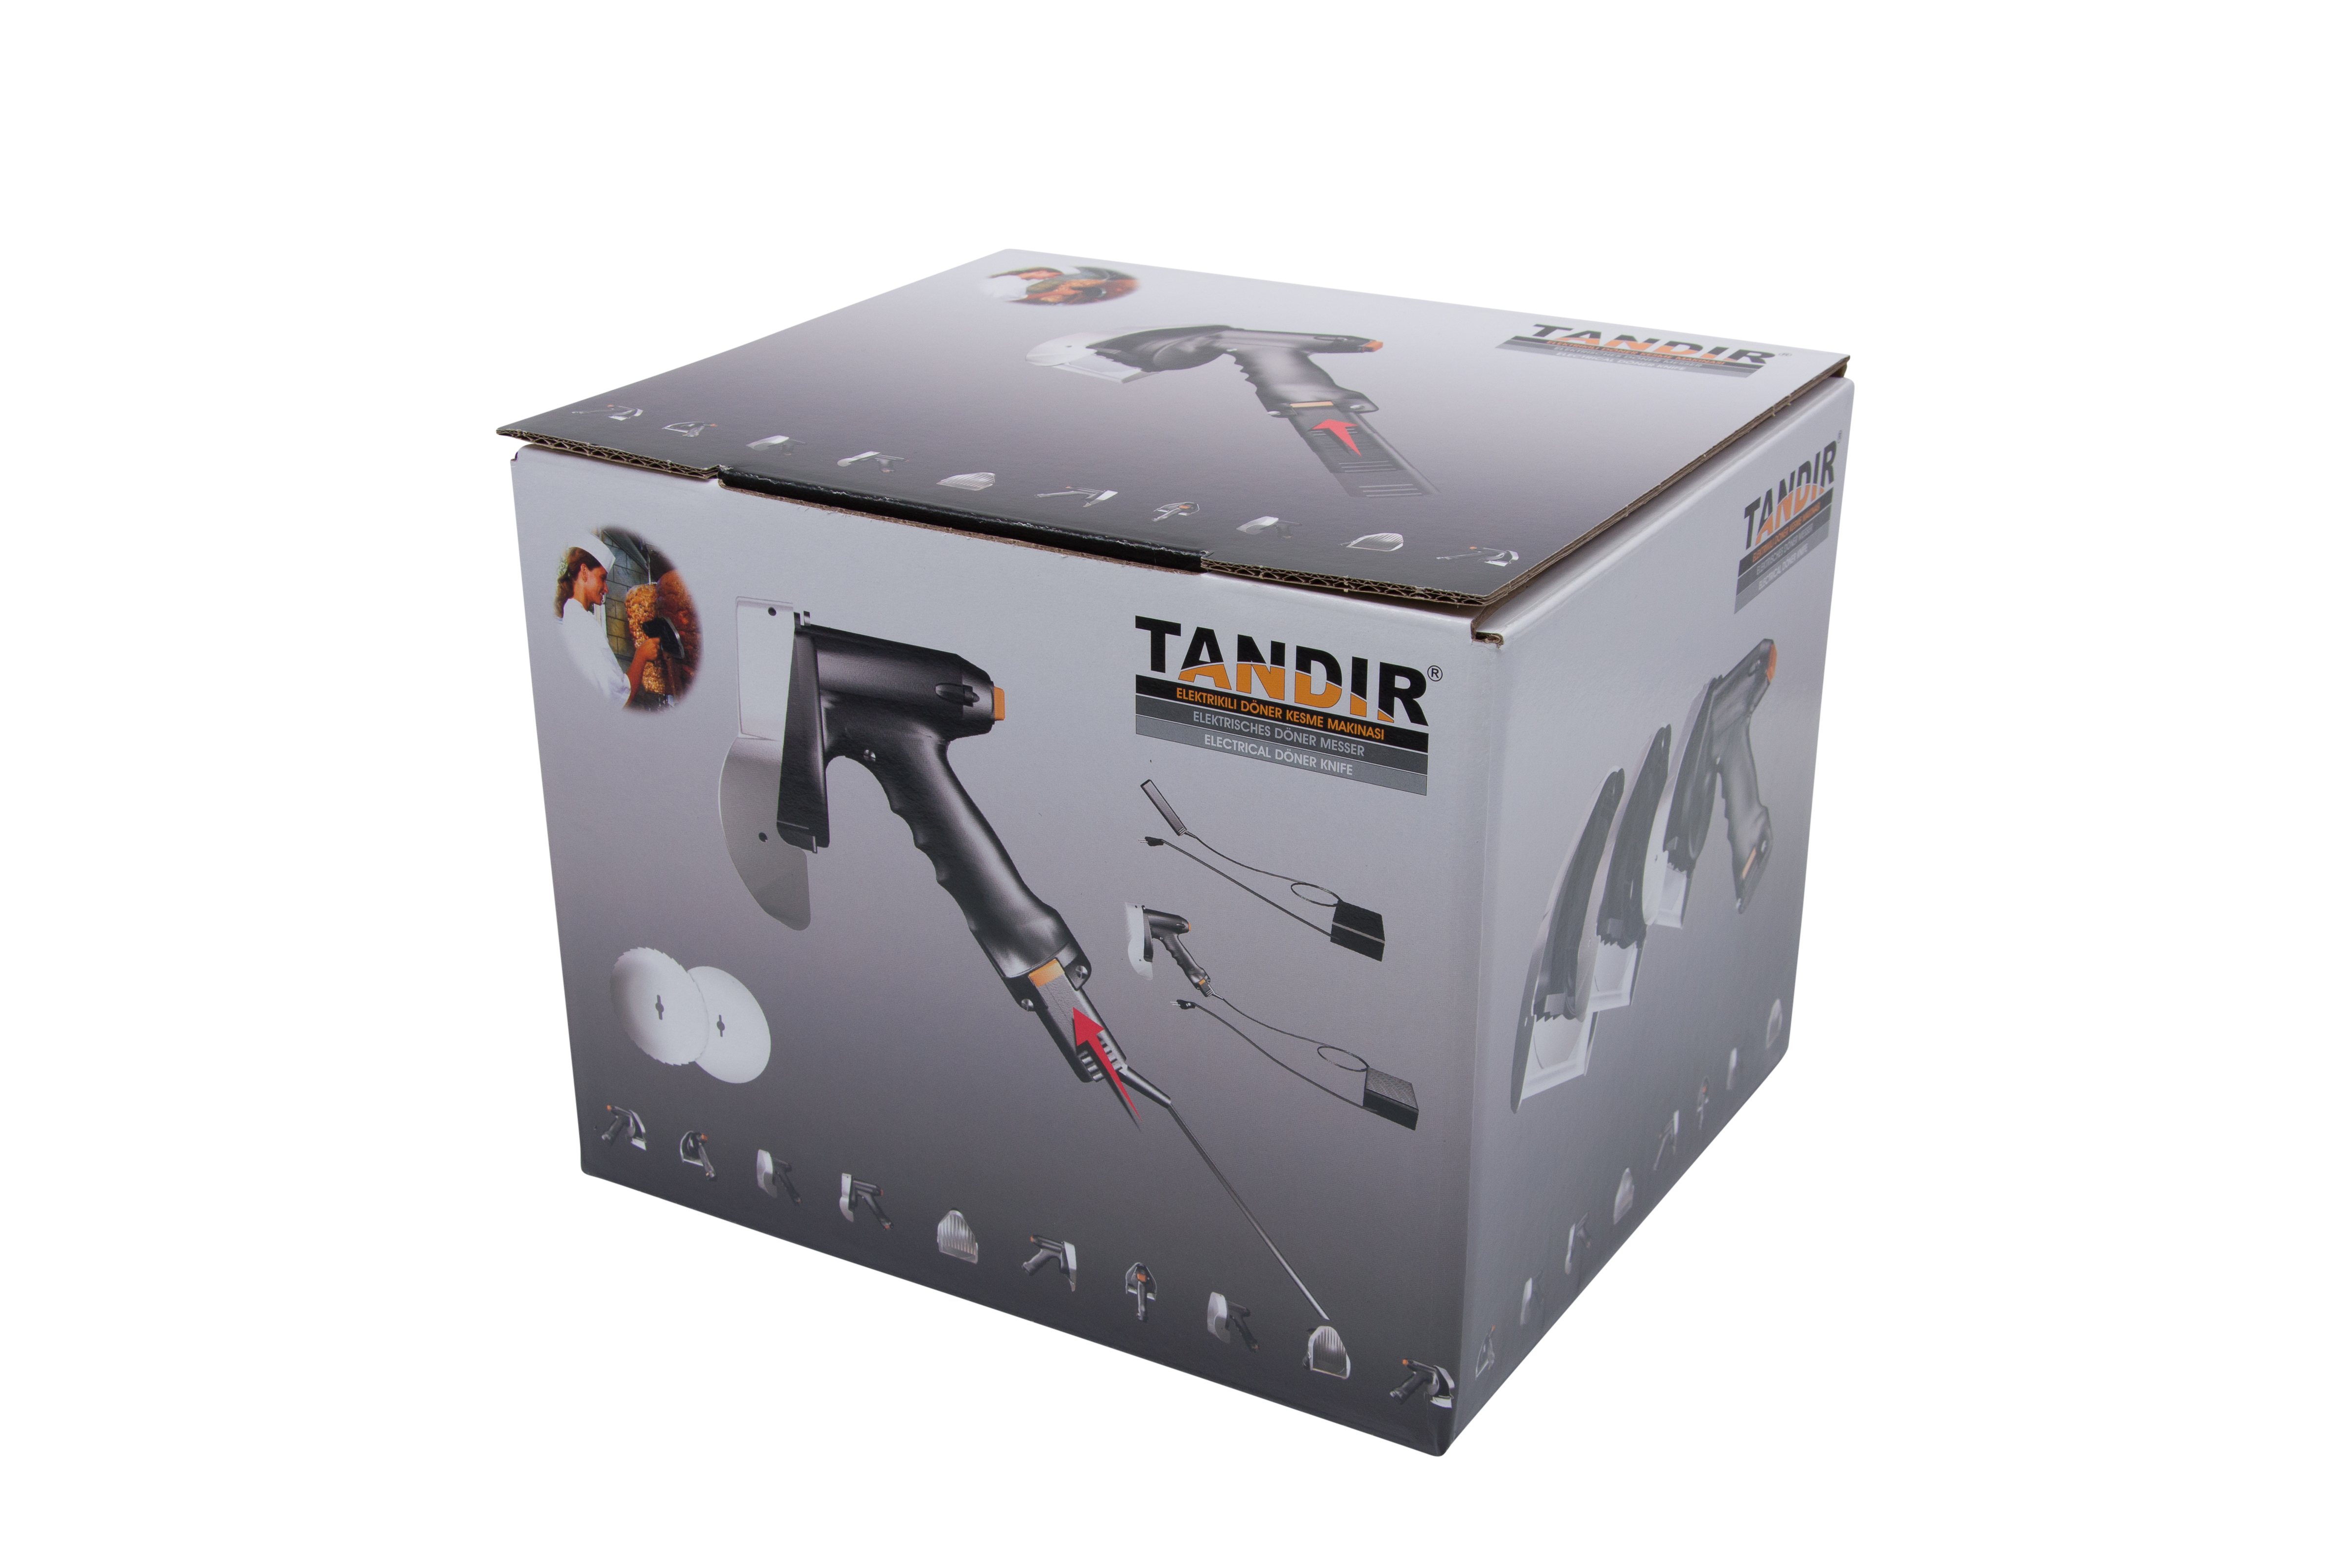 Tandir-Knife II 140 with transformer